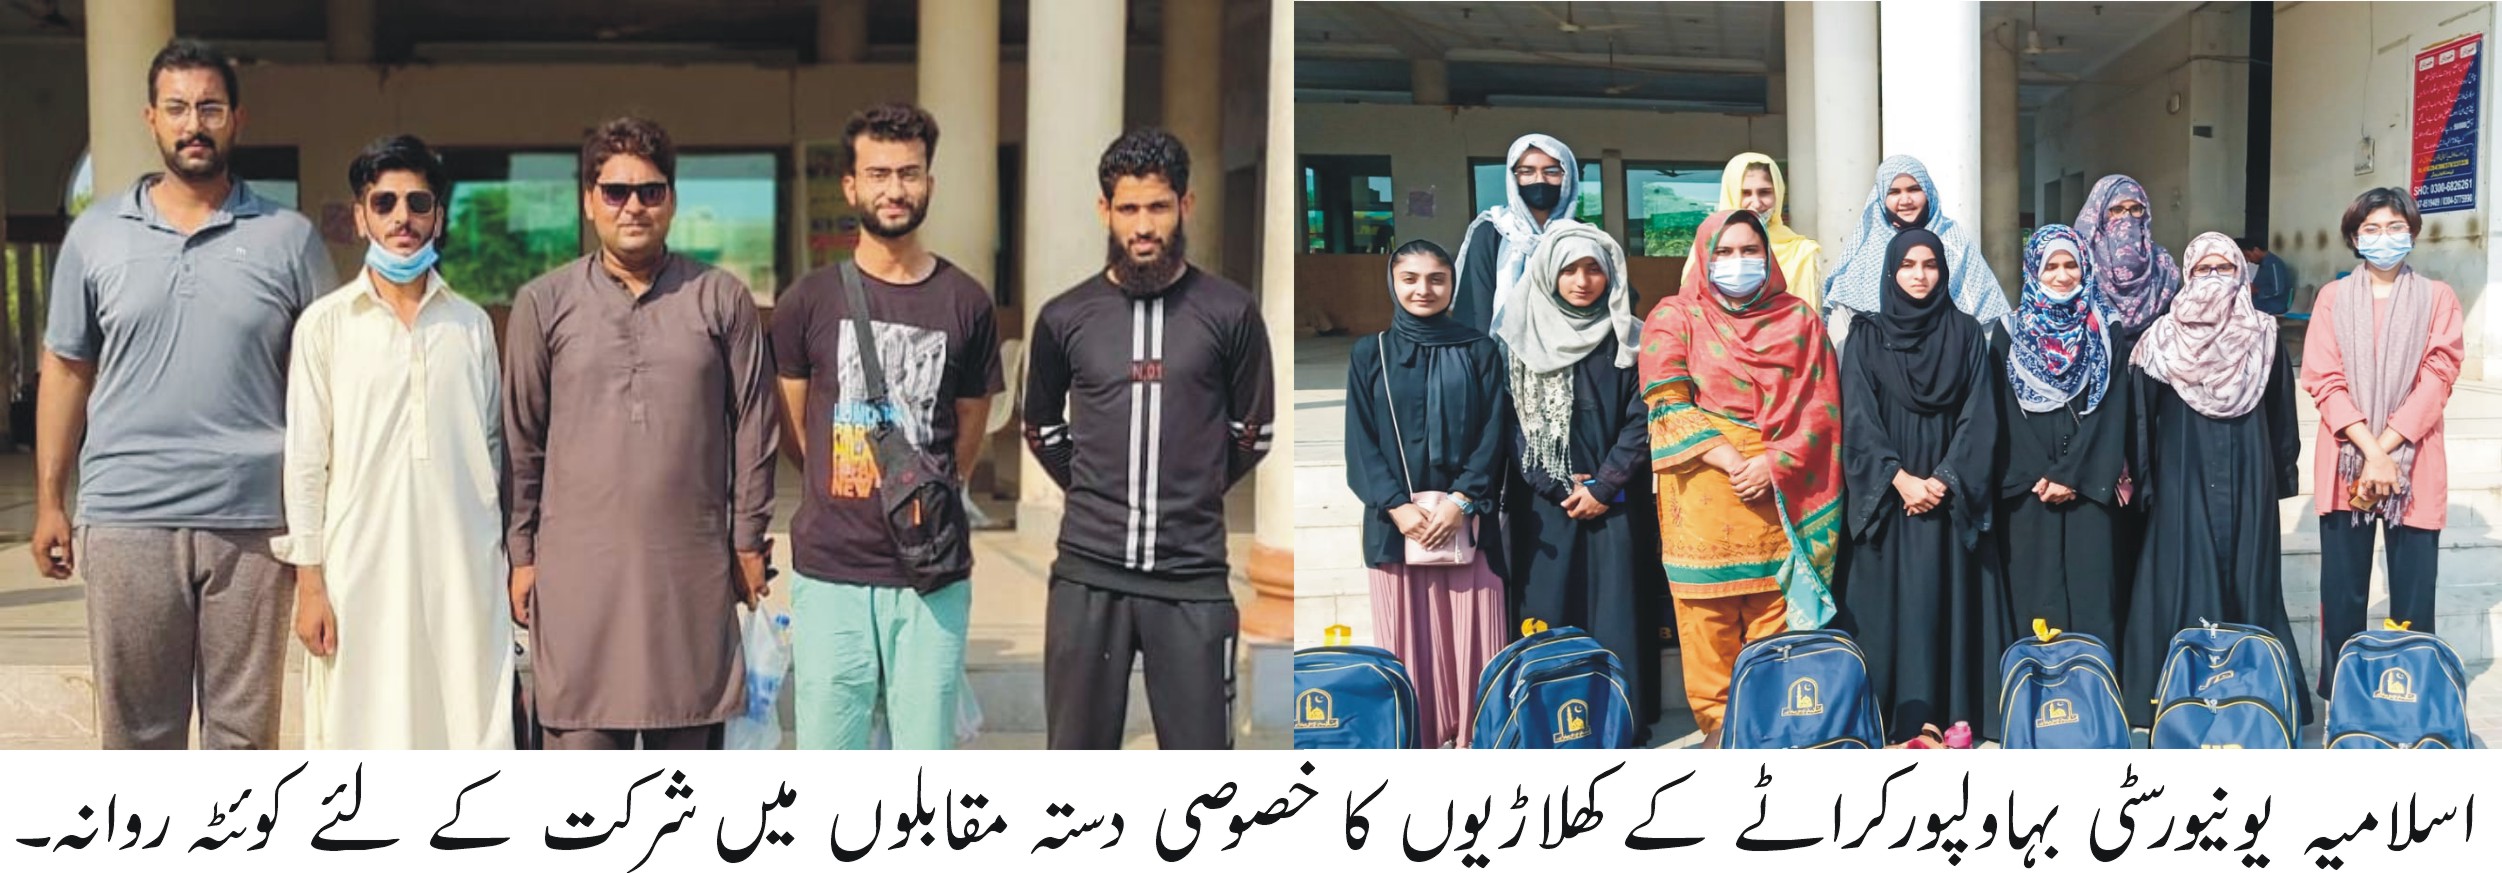 IUB Karraty Team Going Quetta